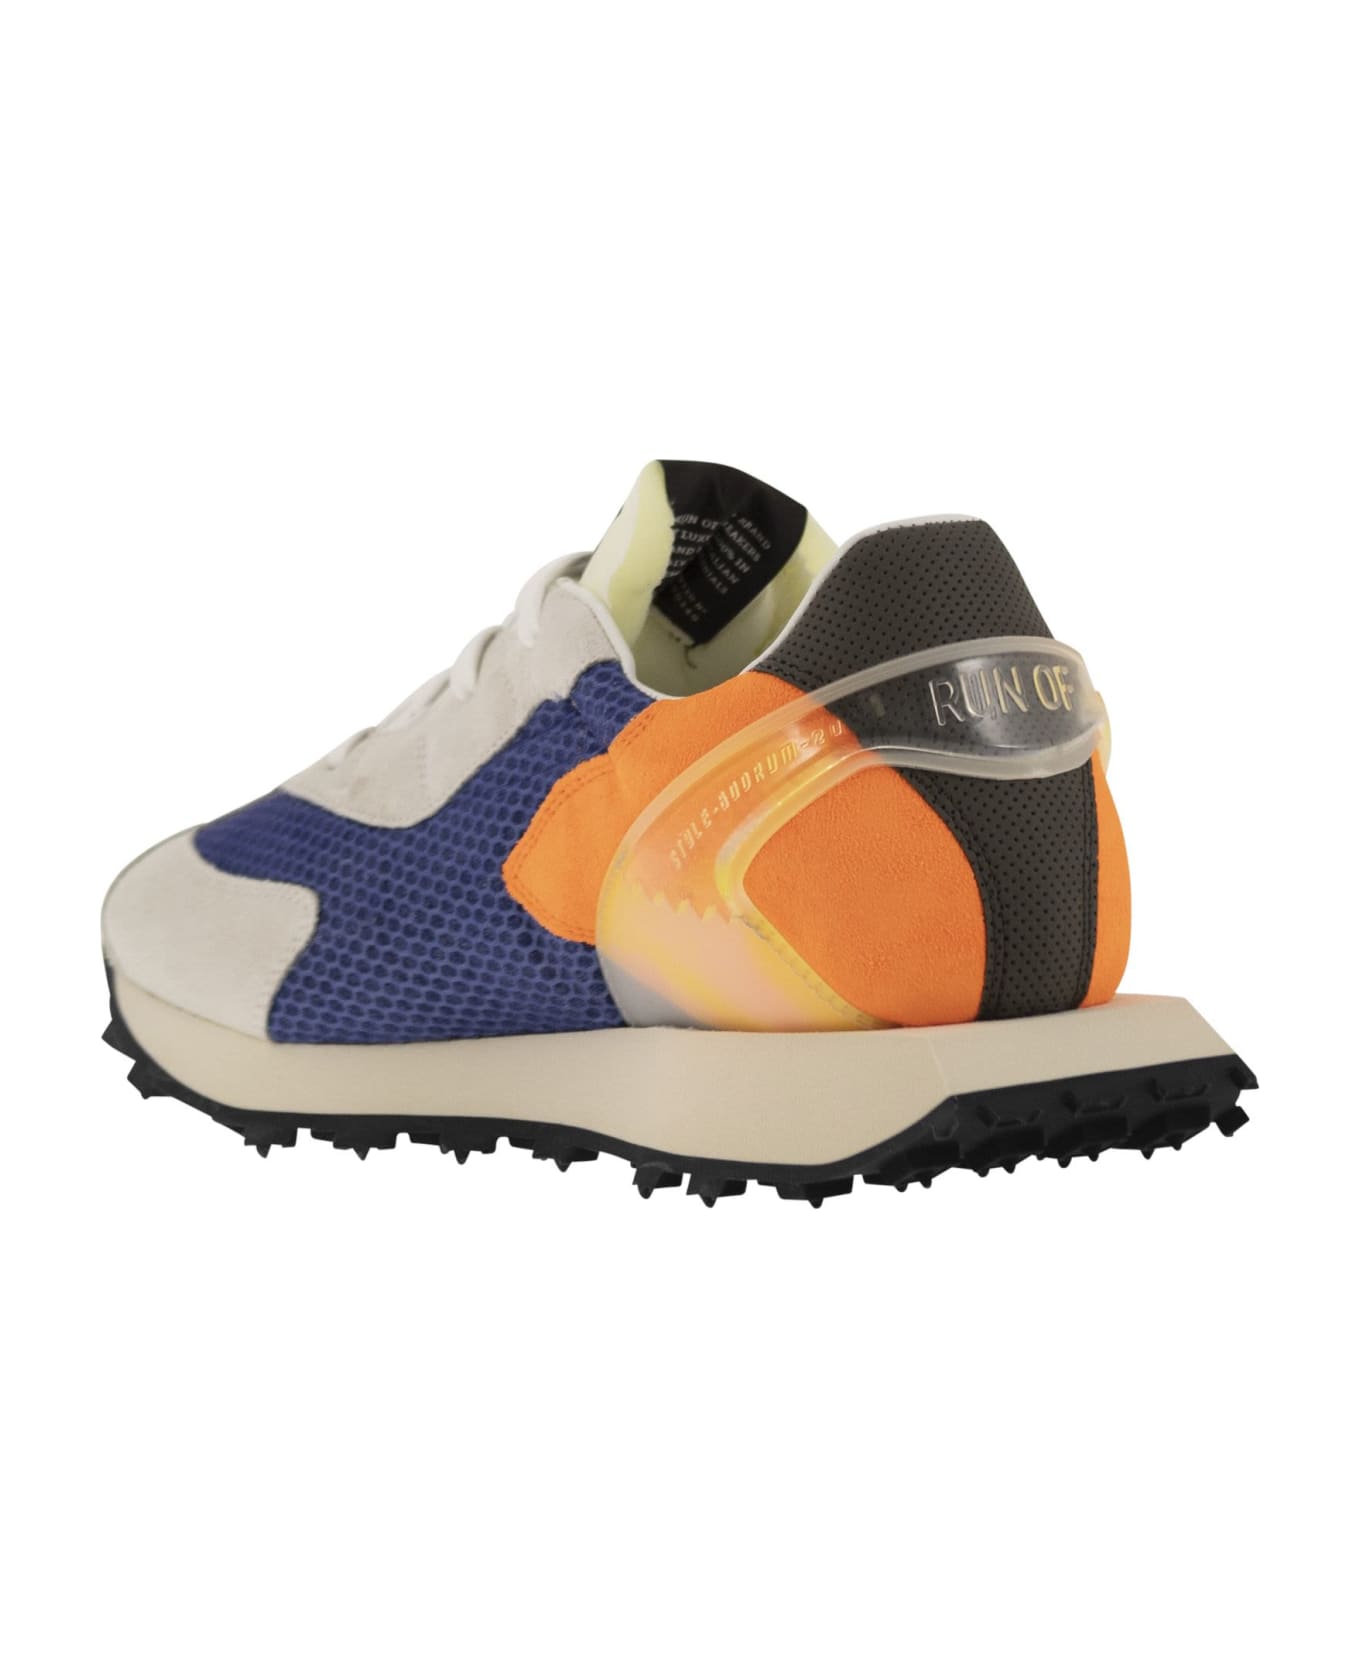 RUN OF Piuma - Sneakers - Blu/orange スニーカー